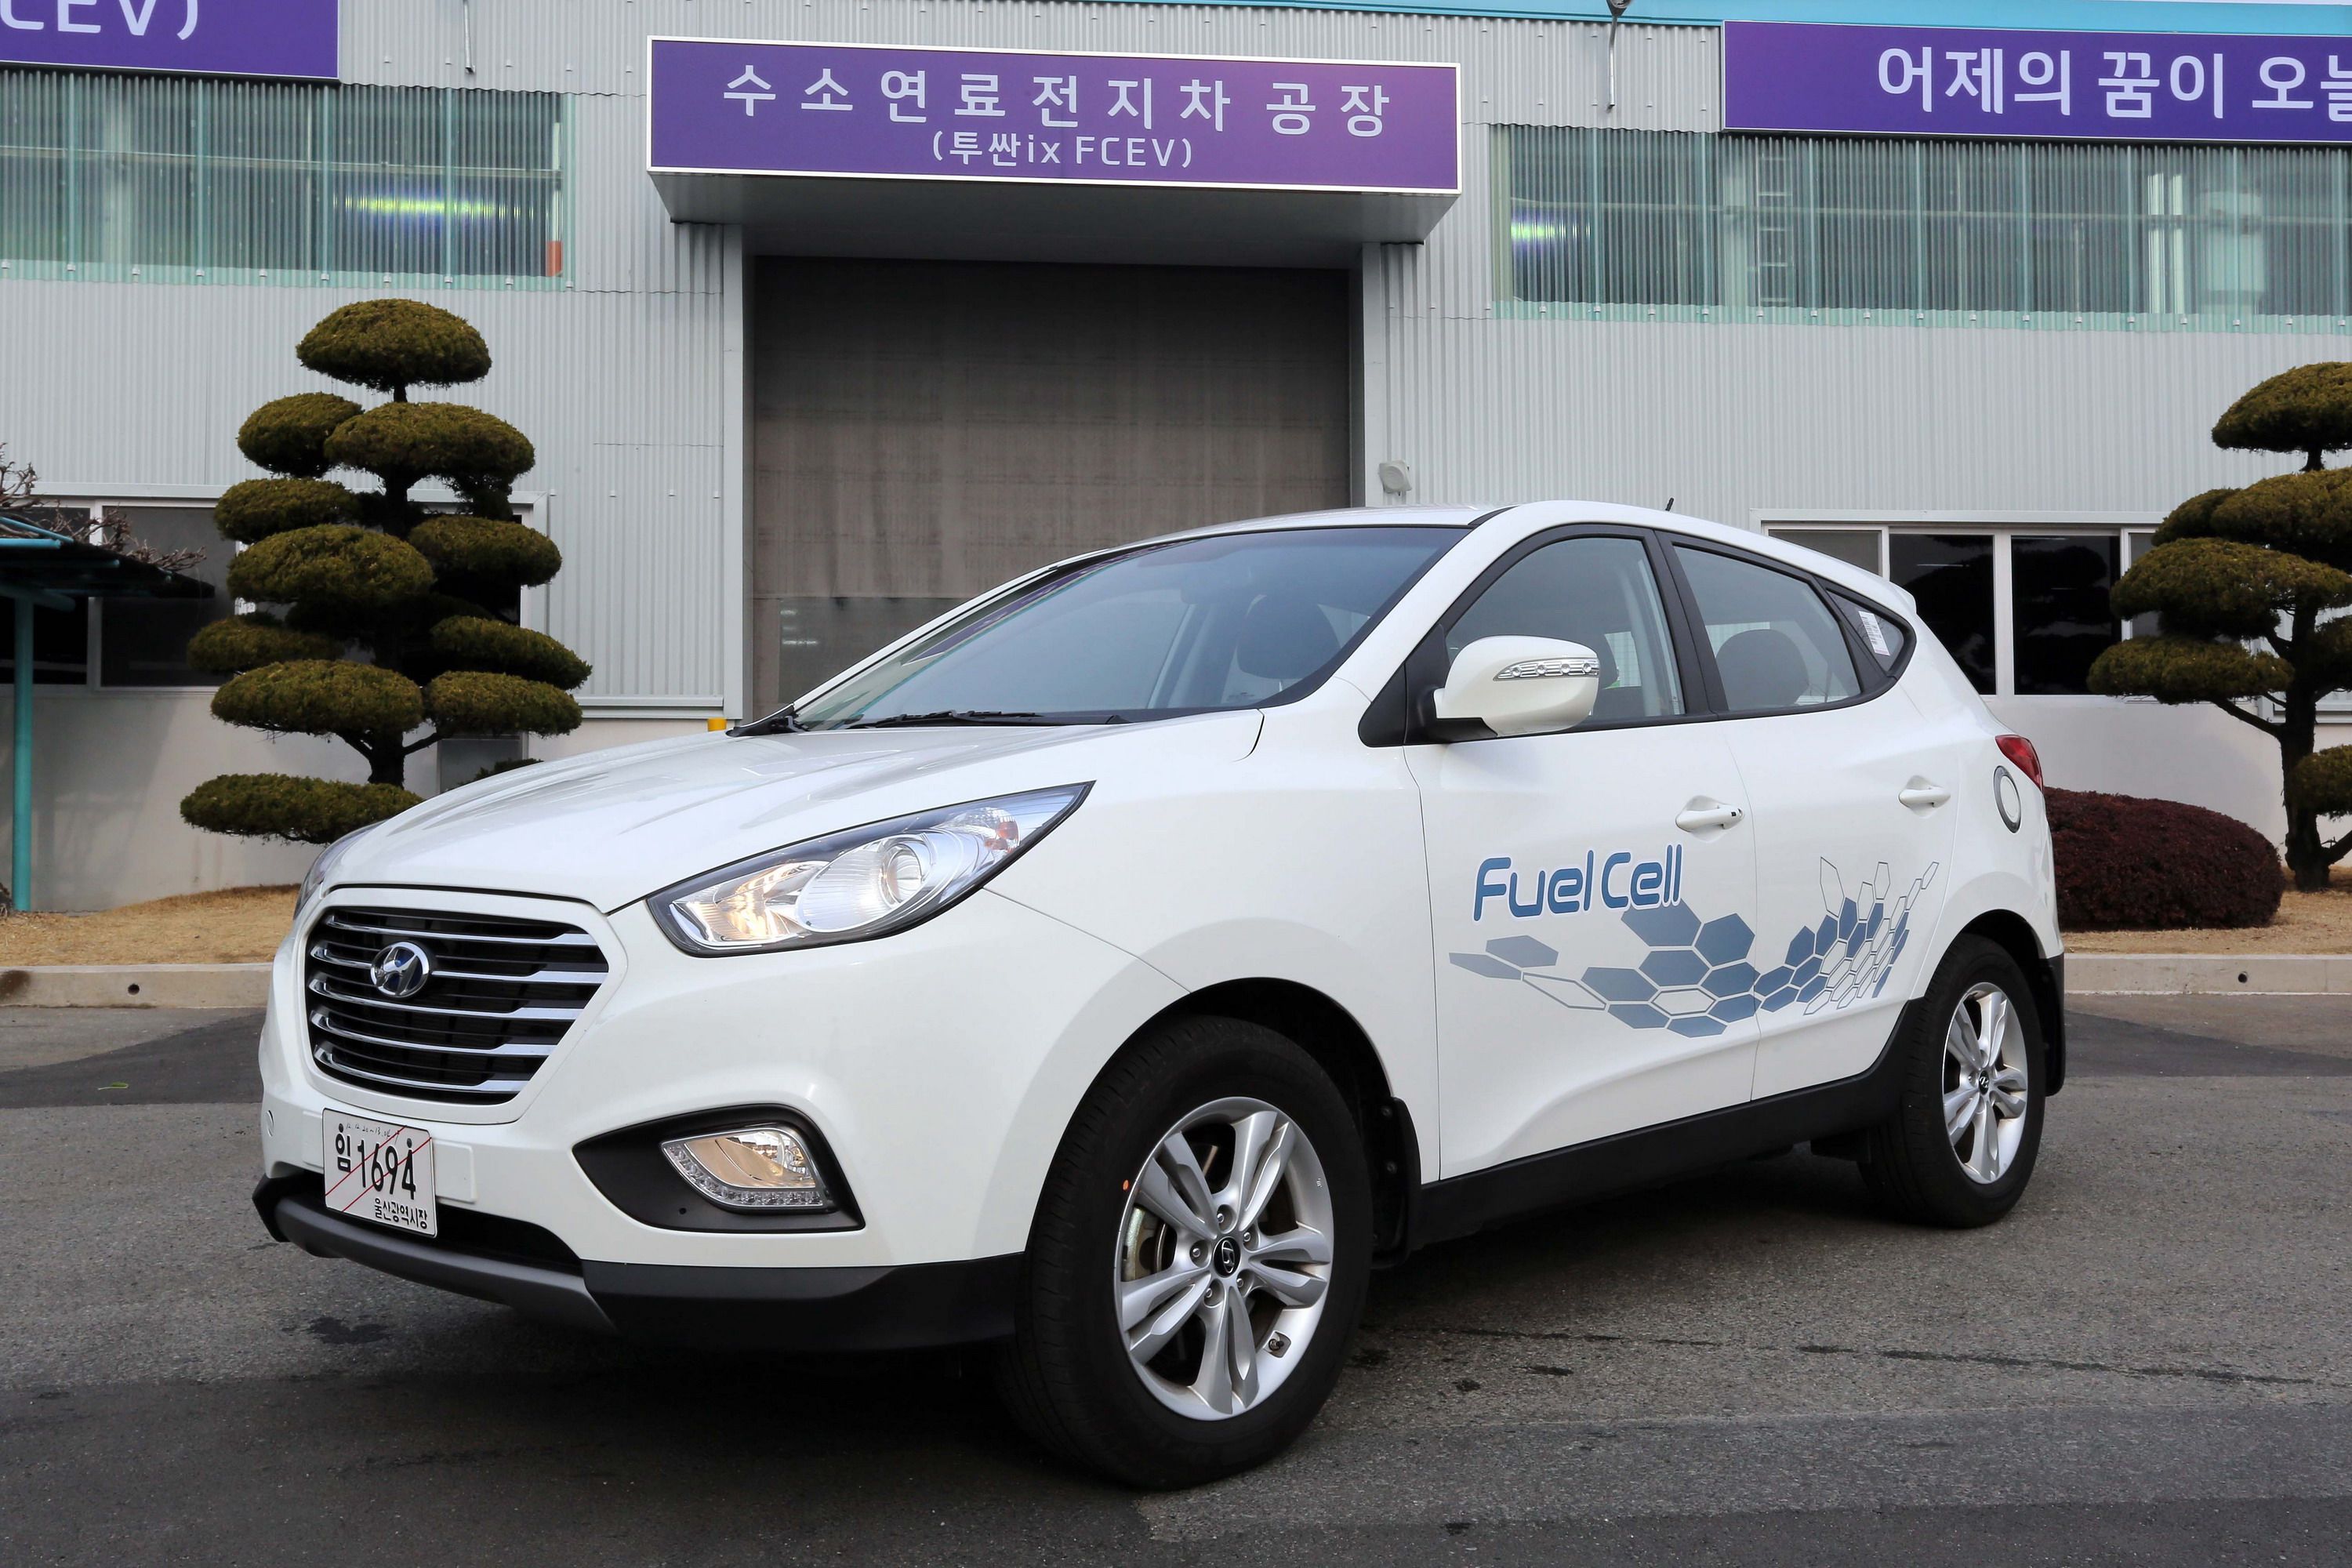 2013 Hyundai ix35 Fuel Cell Vehicle